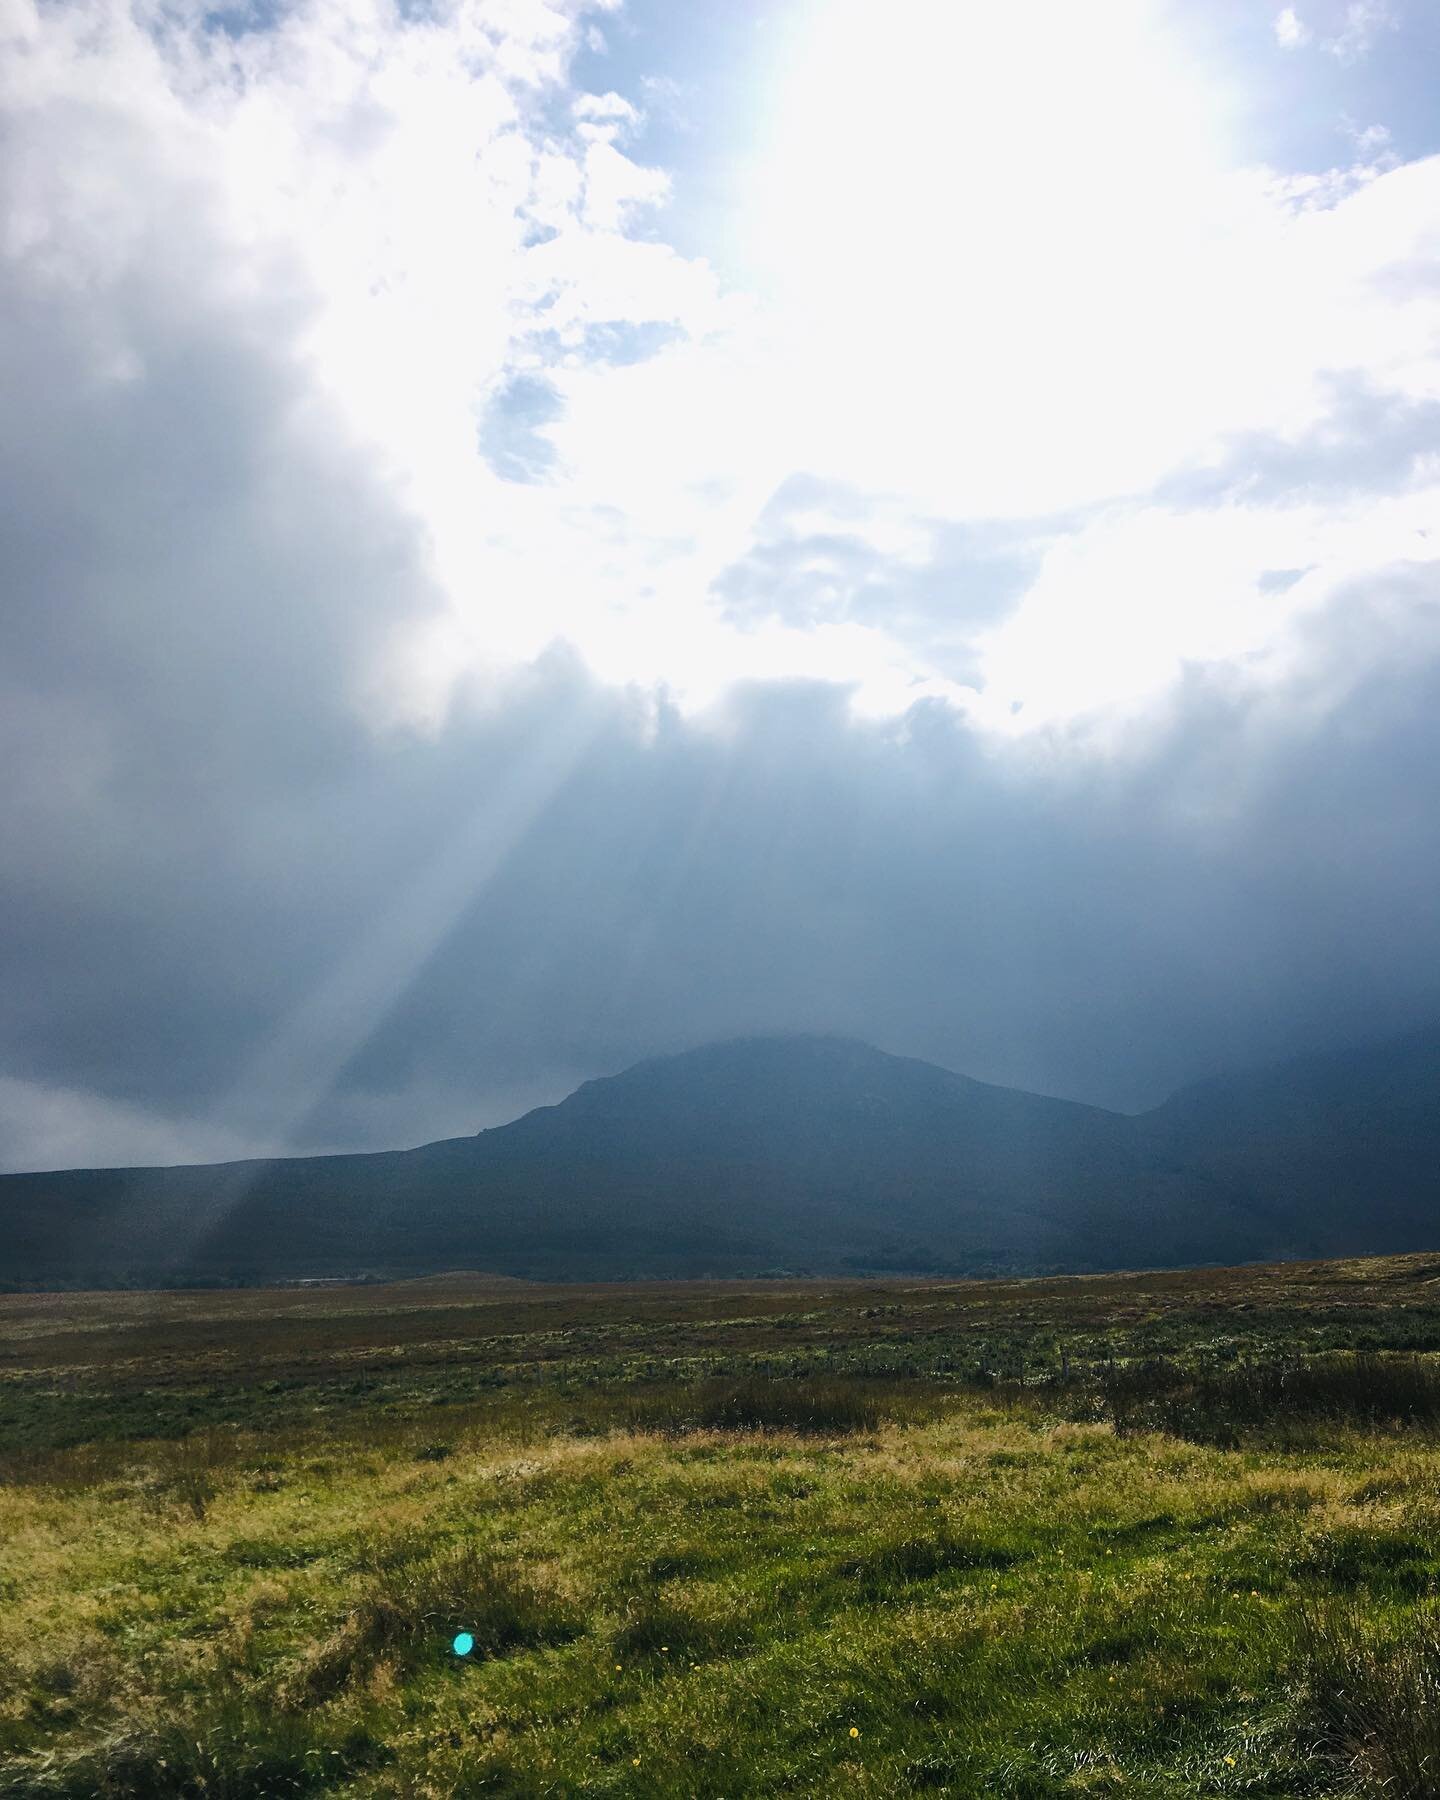 Morning walk. @kyle.scot Northern Scotland highlands . #refresh #inspiration #nature #natureswonders #kylehouse #scotlandhighlands